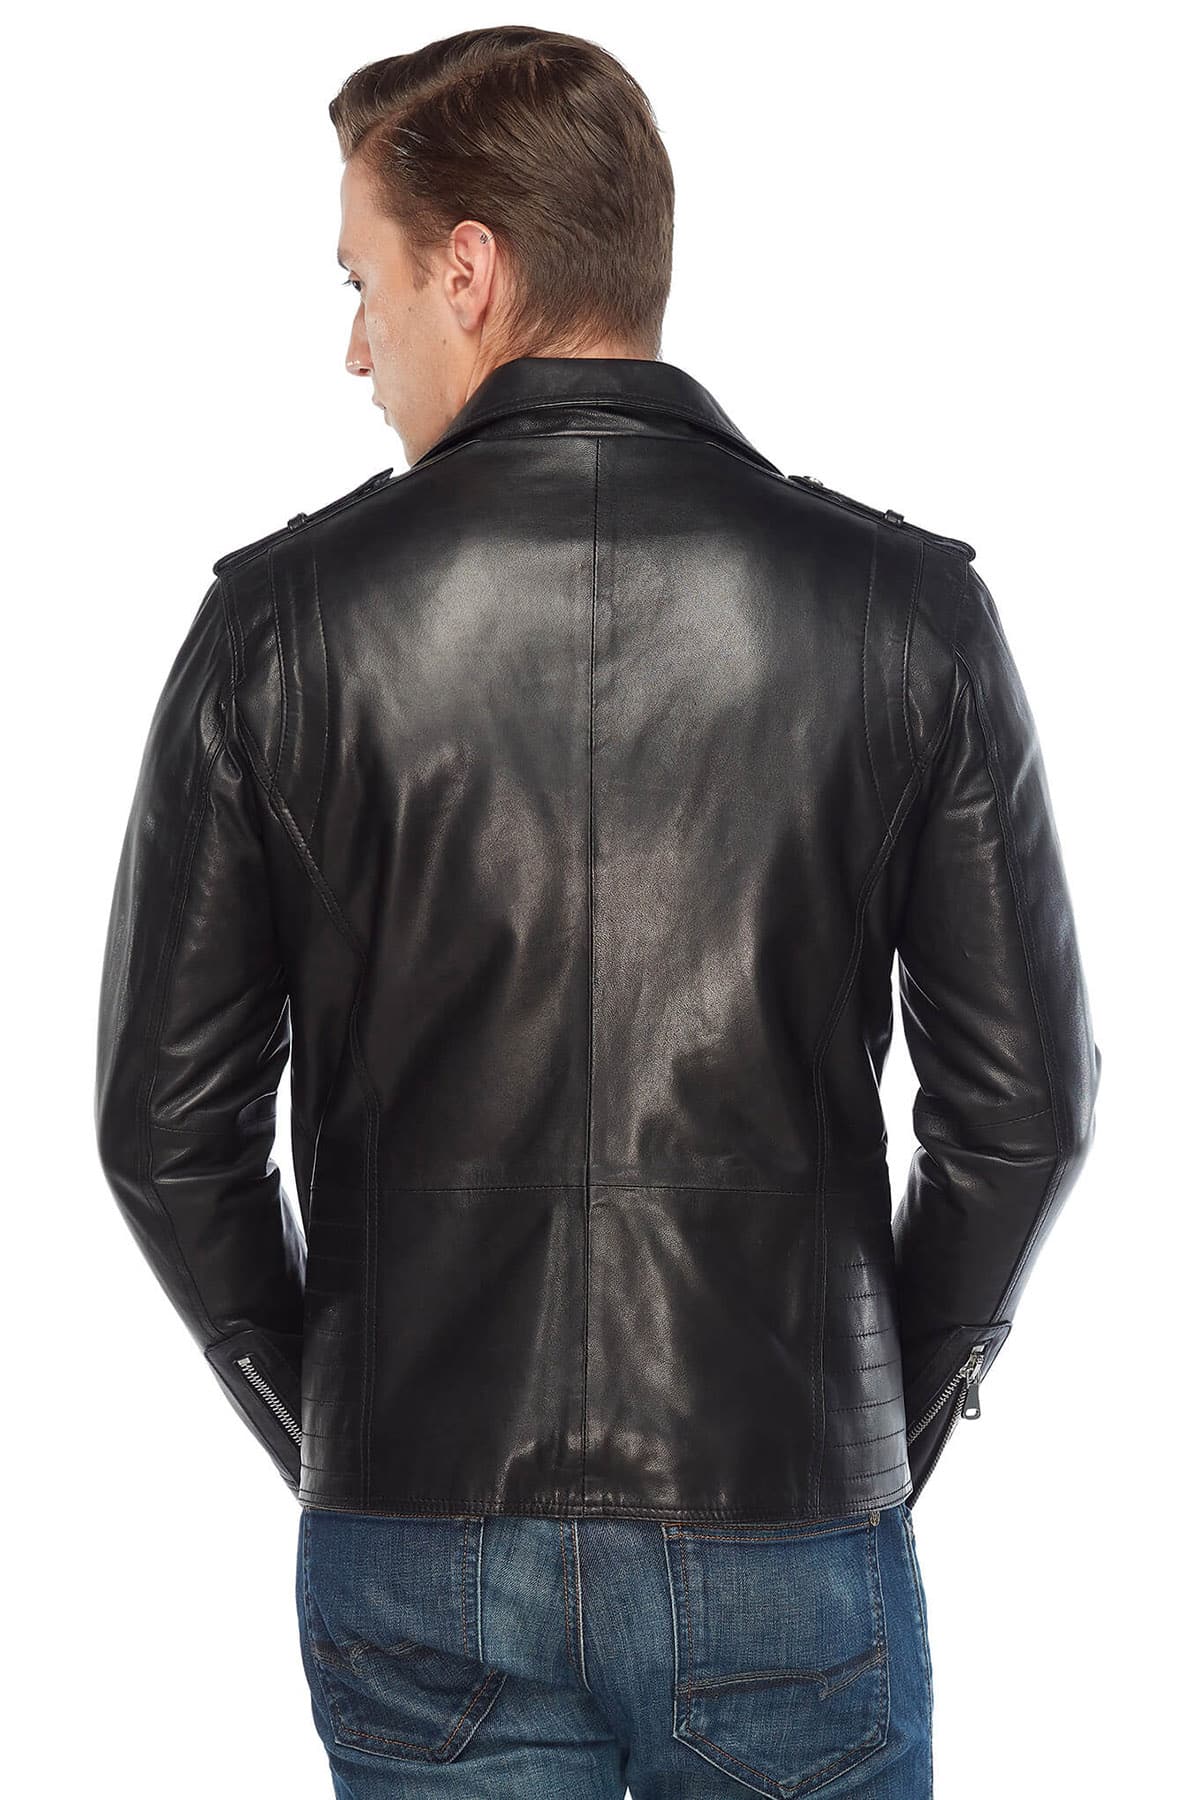 Hugh Dancy Men's 100 % Real Black Leather Biker Jacket